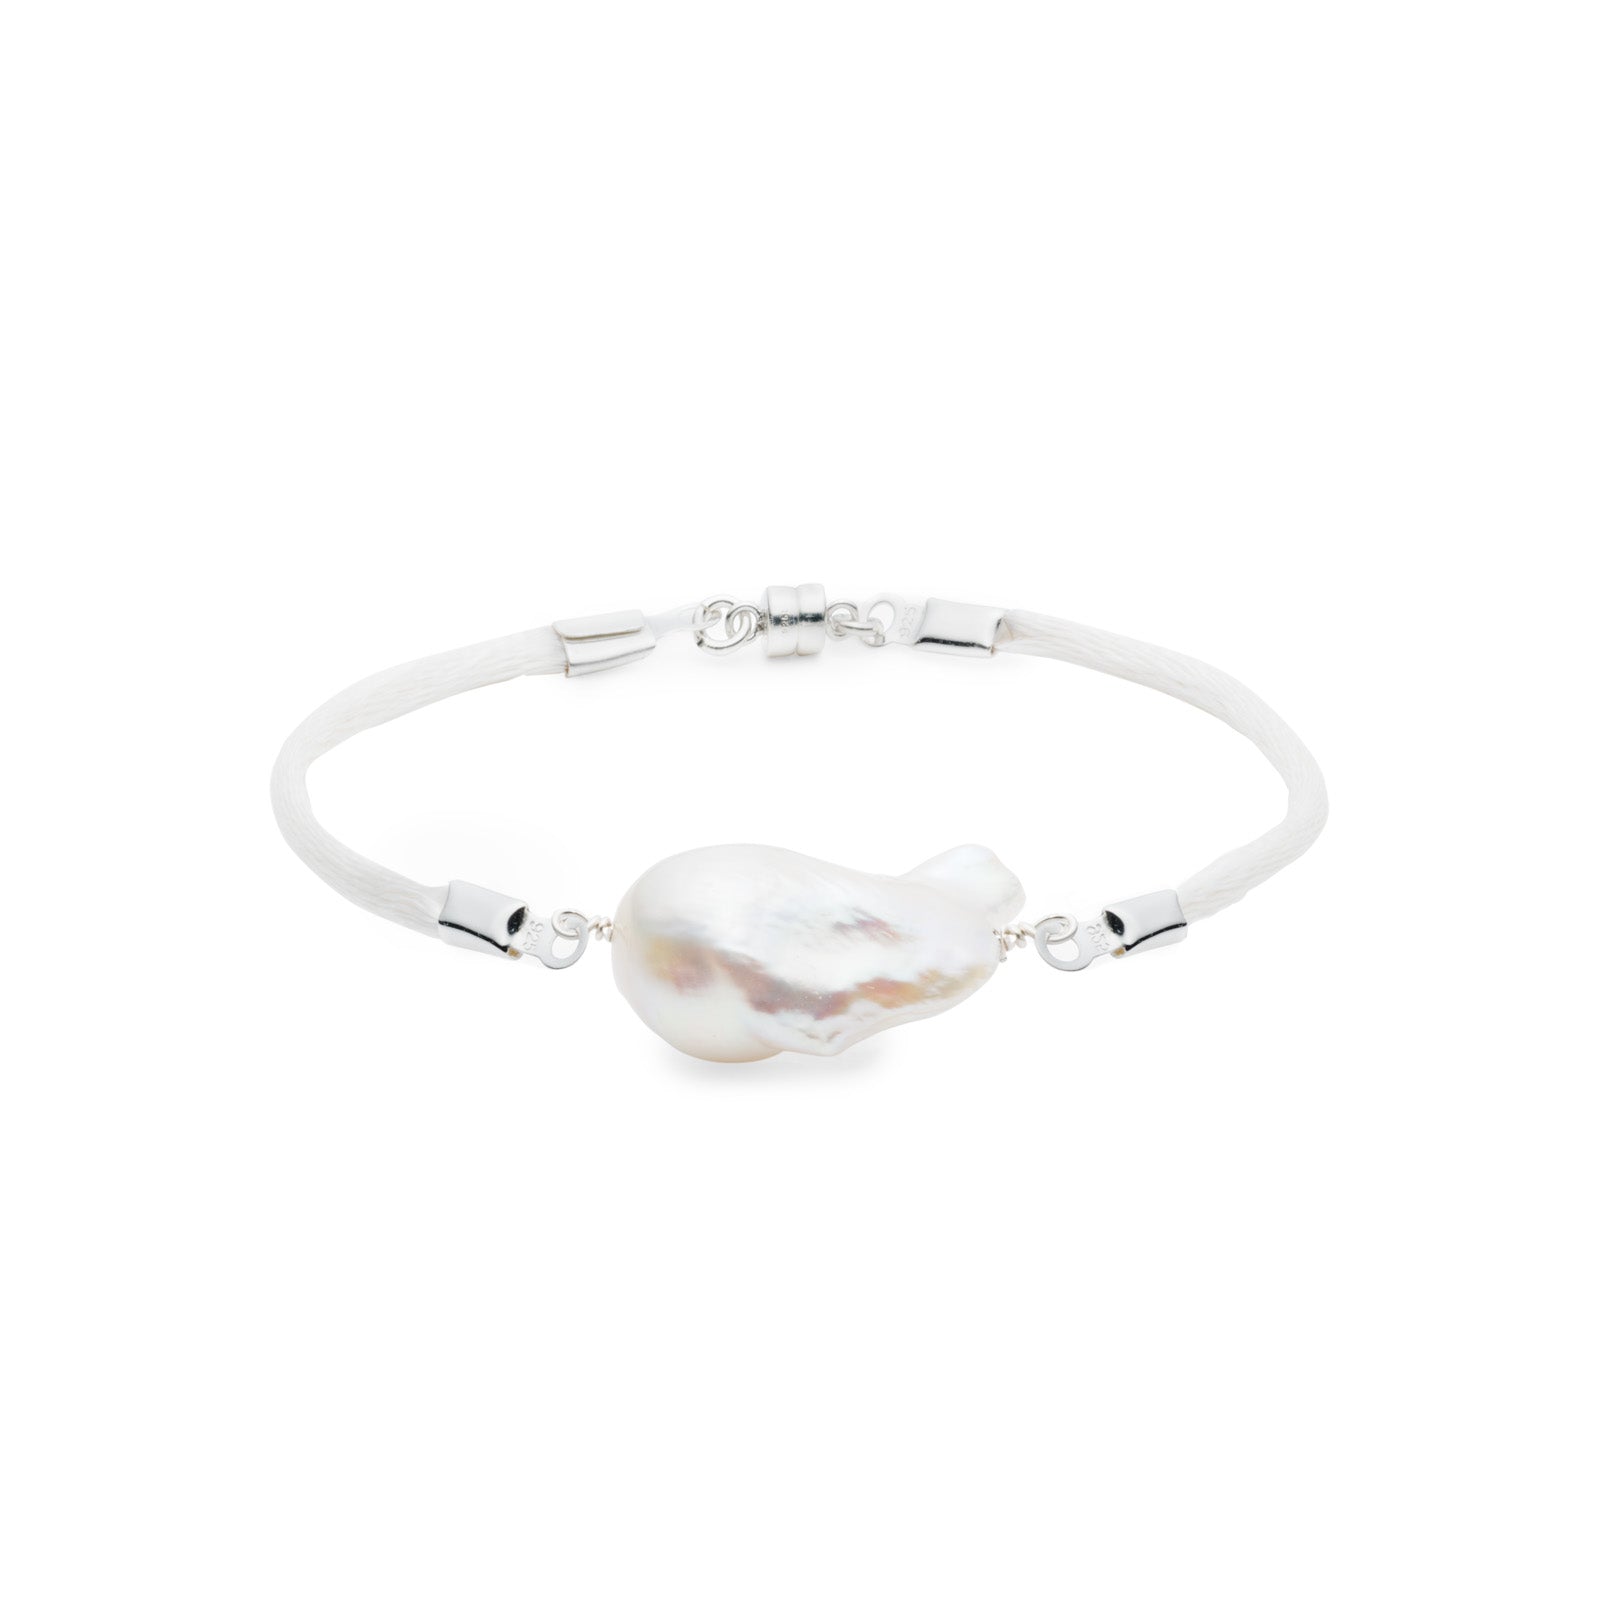 Shop trendy silver bracelet for women online at low price